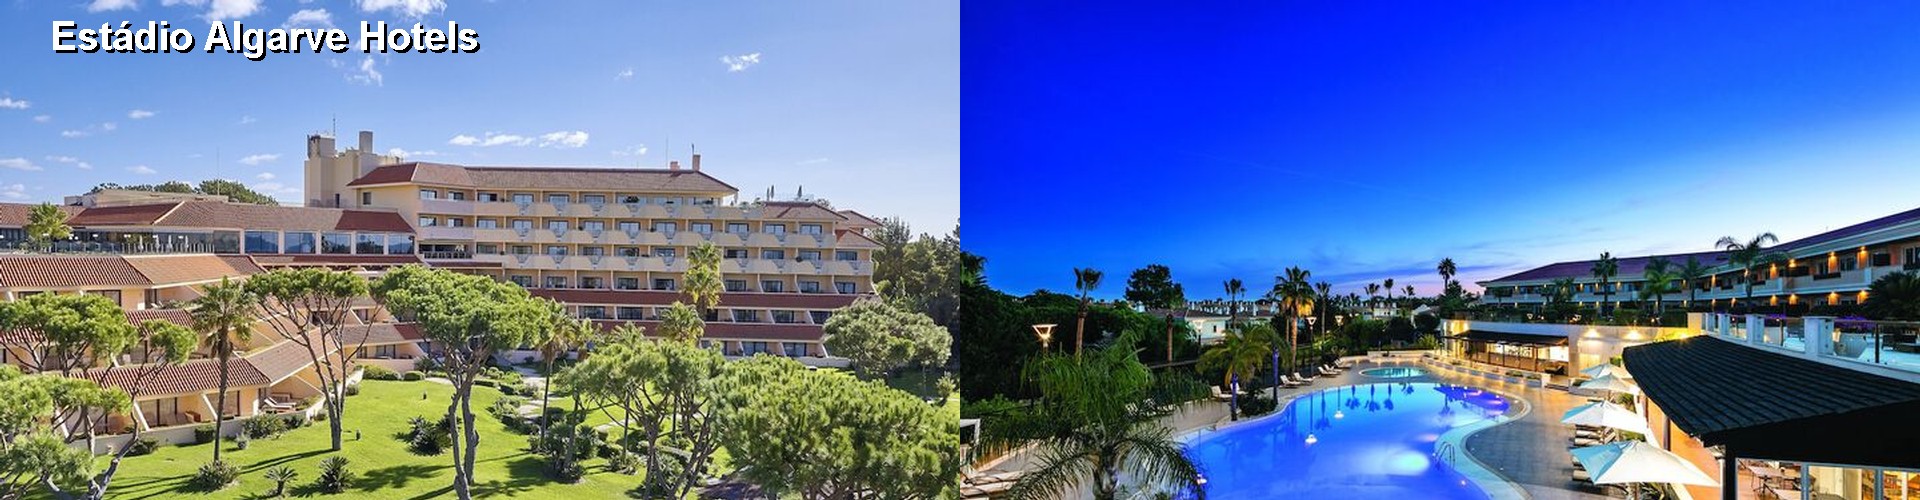 5 Best Hotels near Estádio Algarve